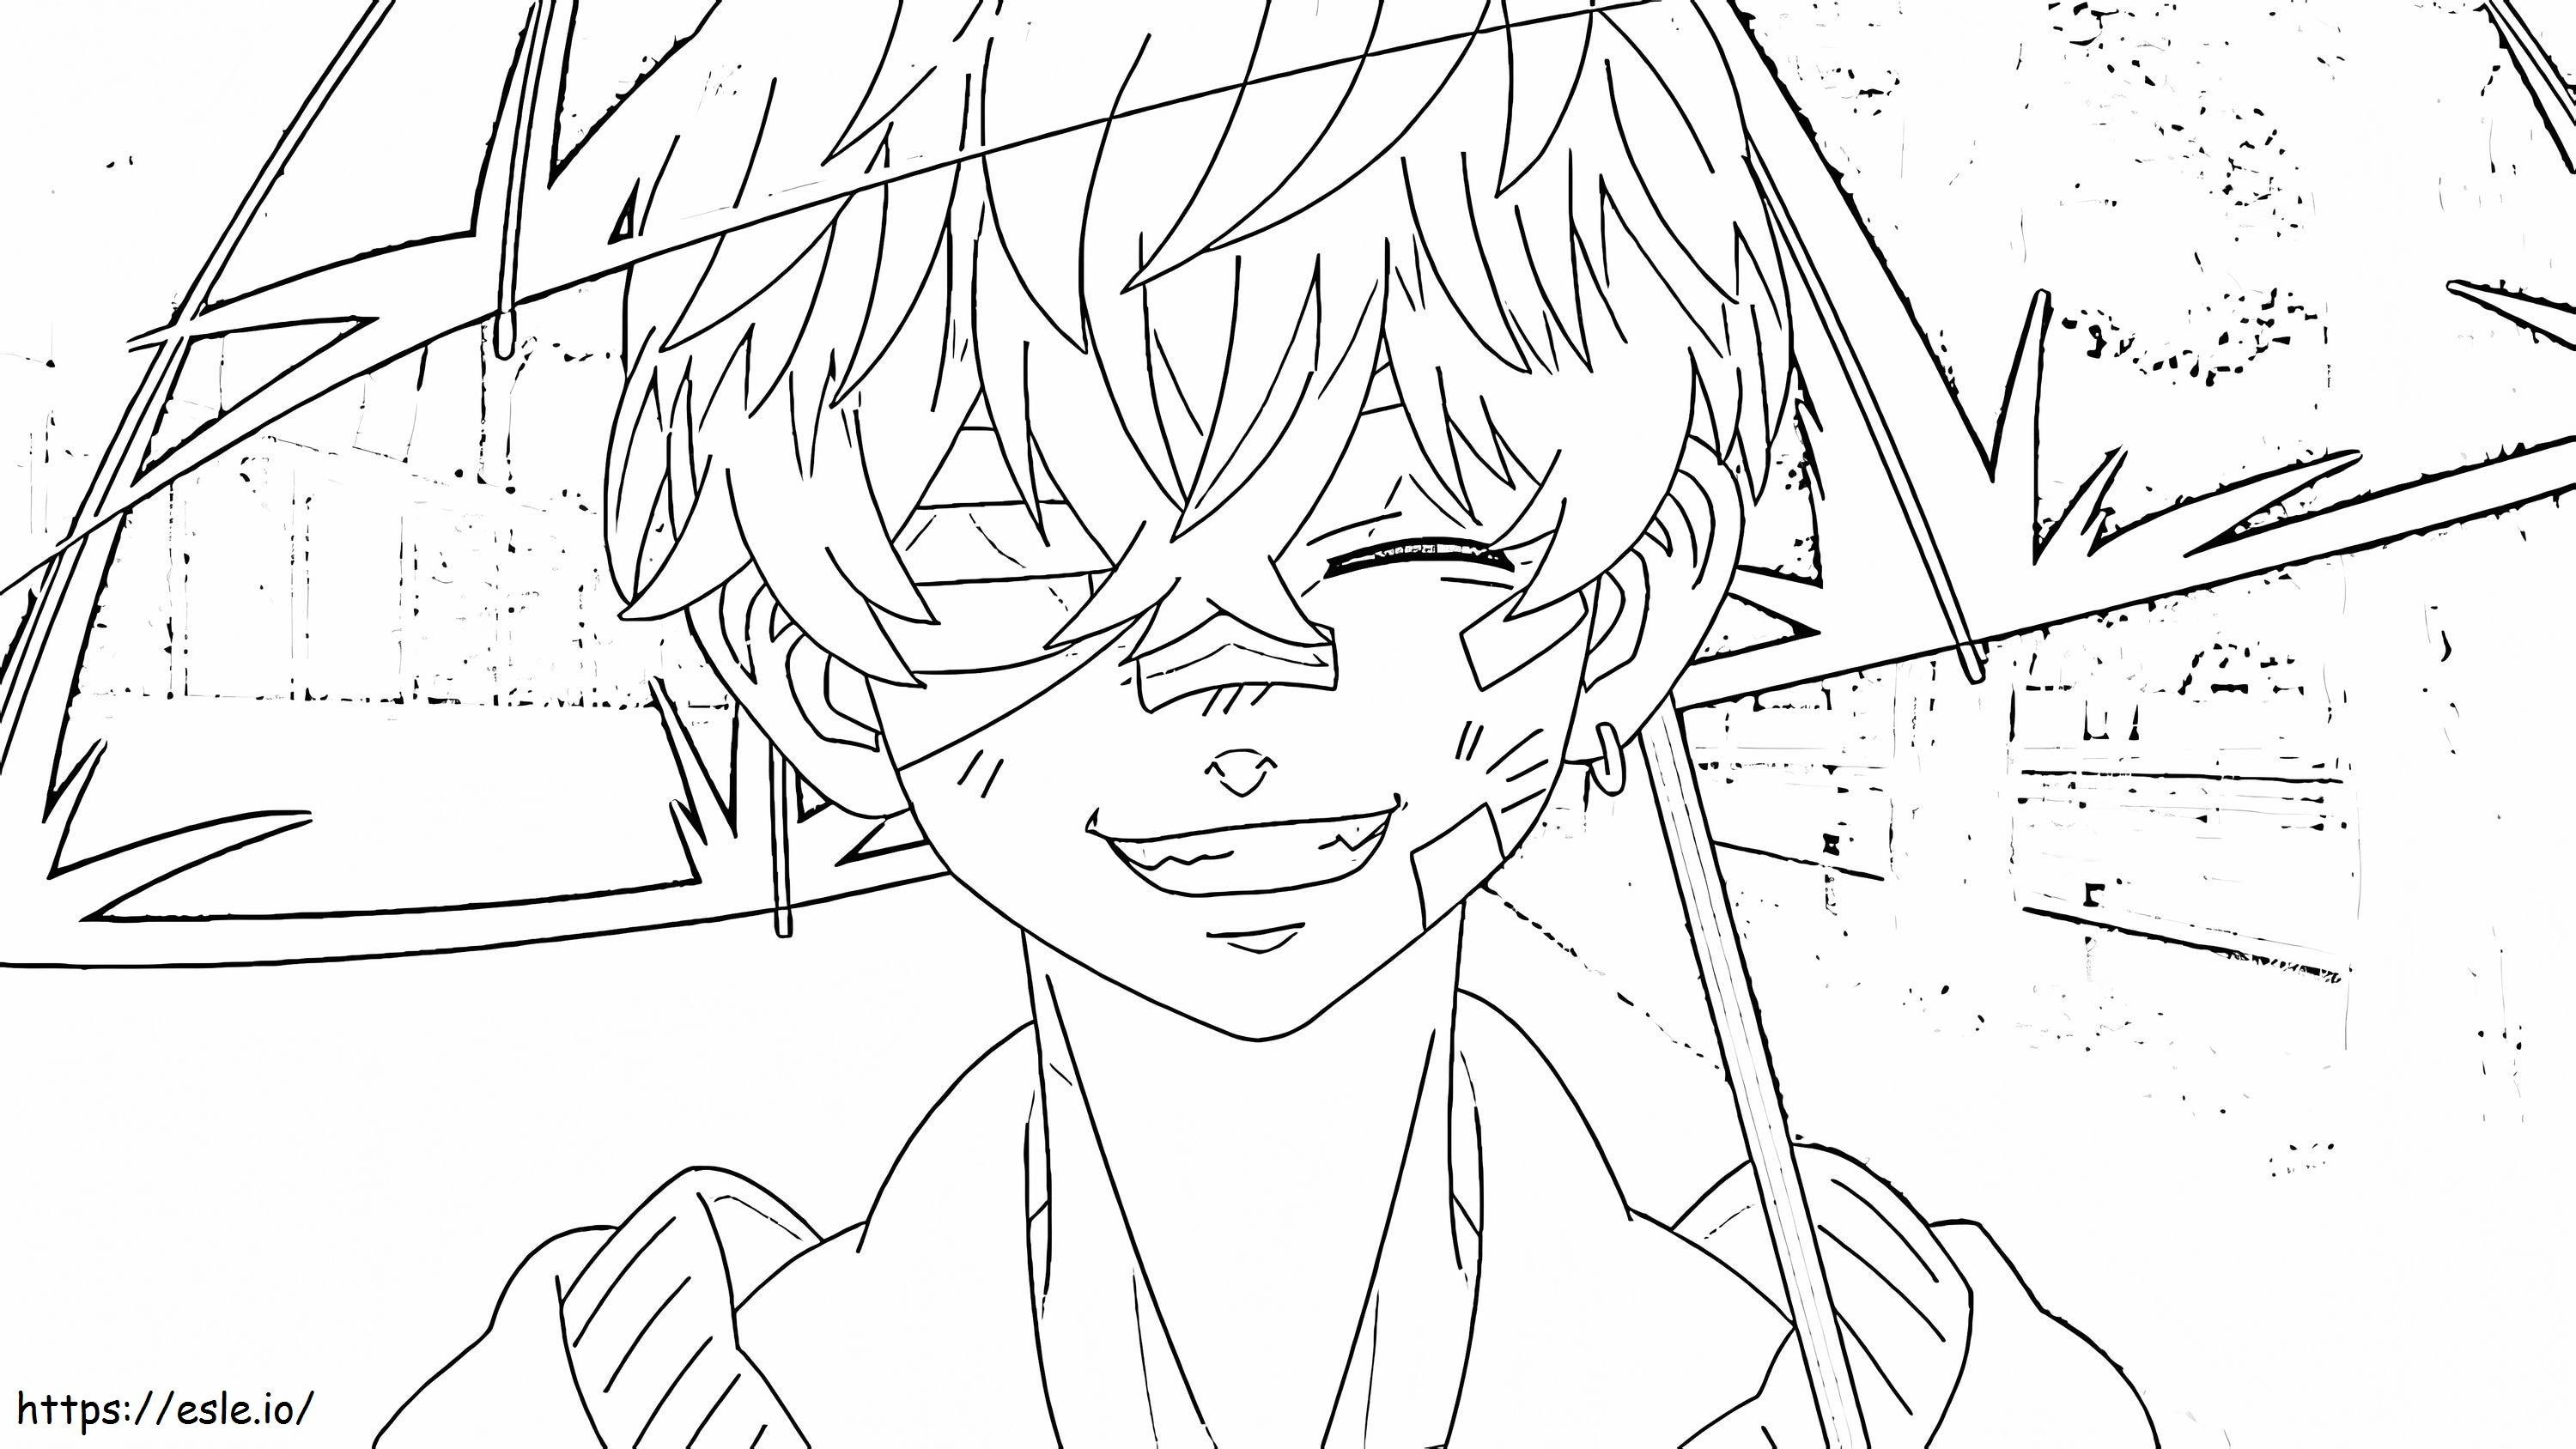 Chifuyu Matsuno Smiling coloring page